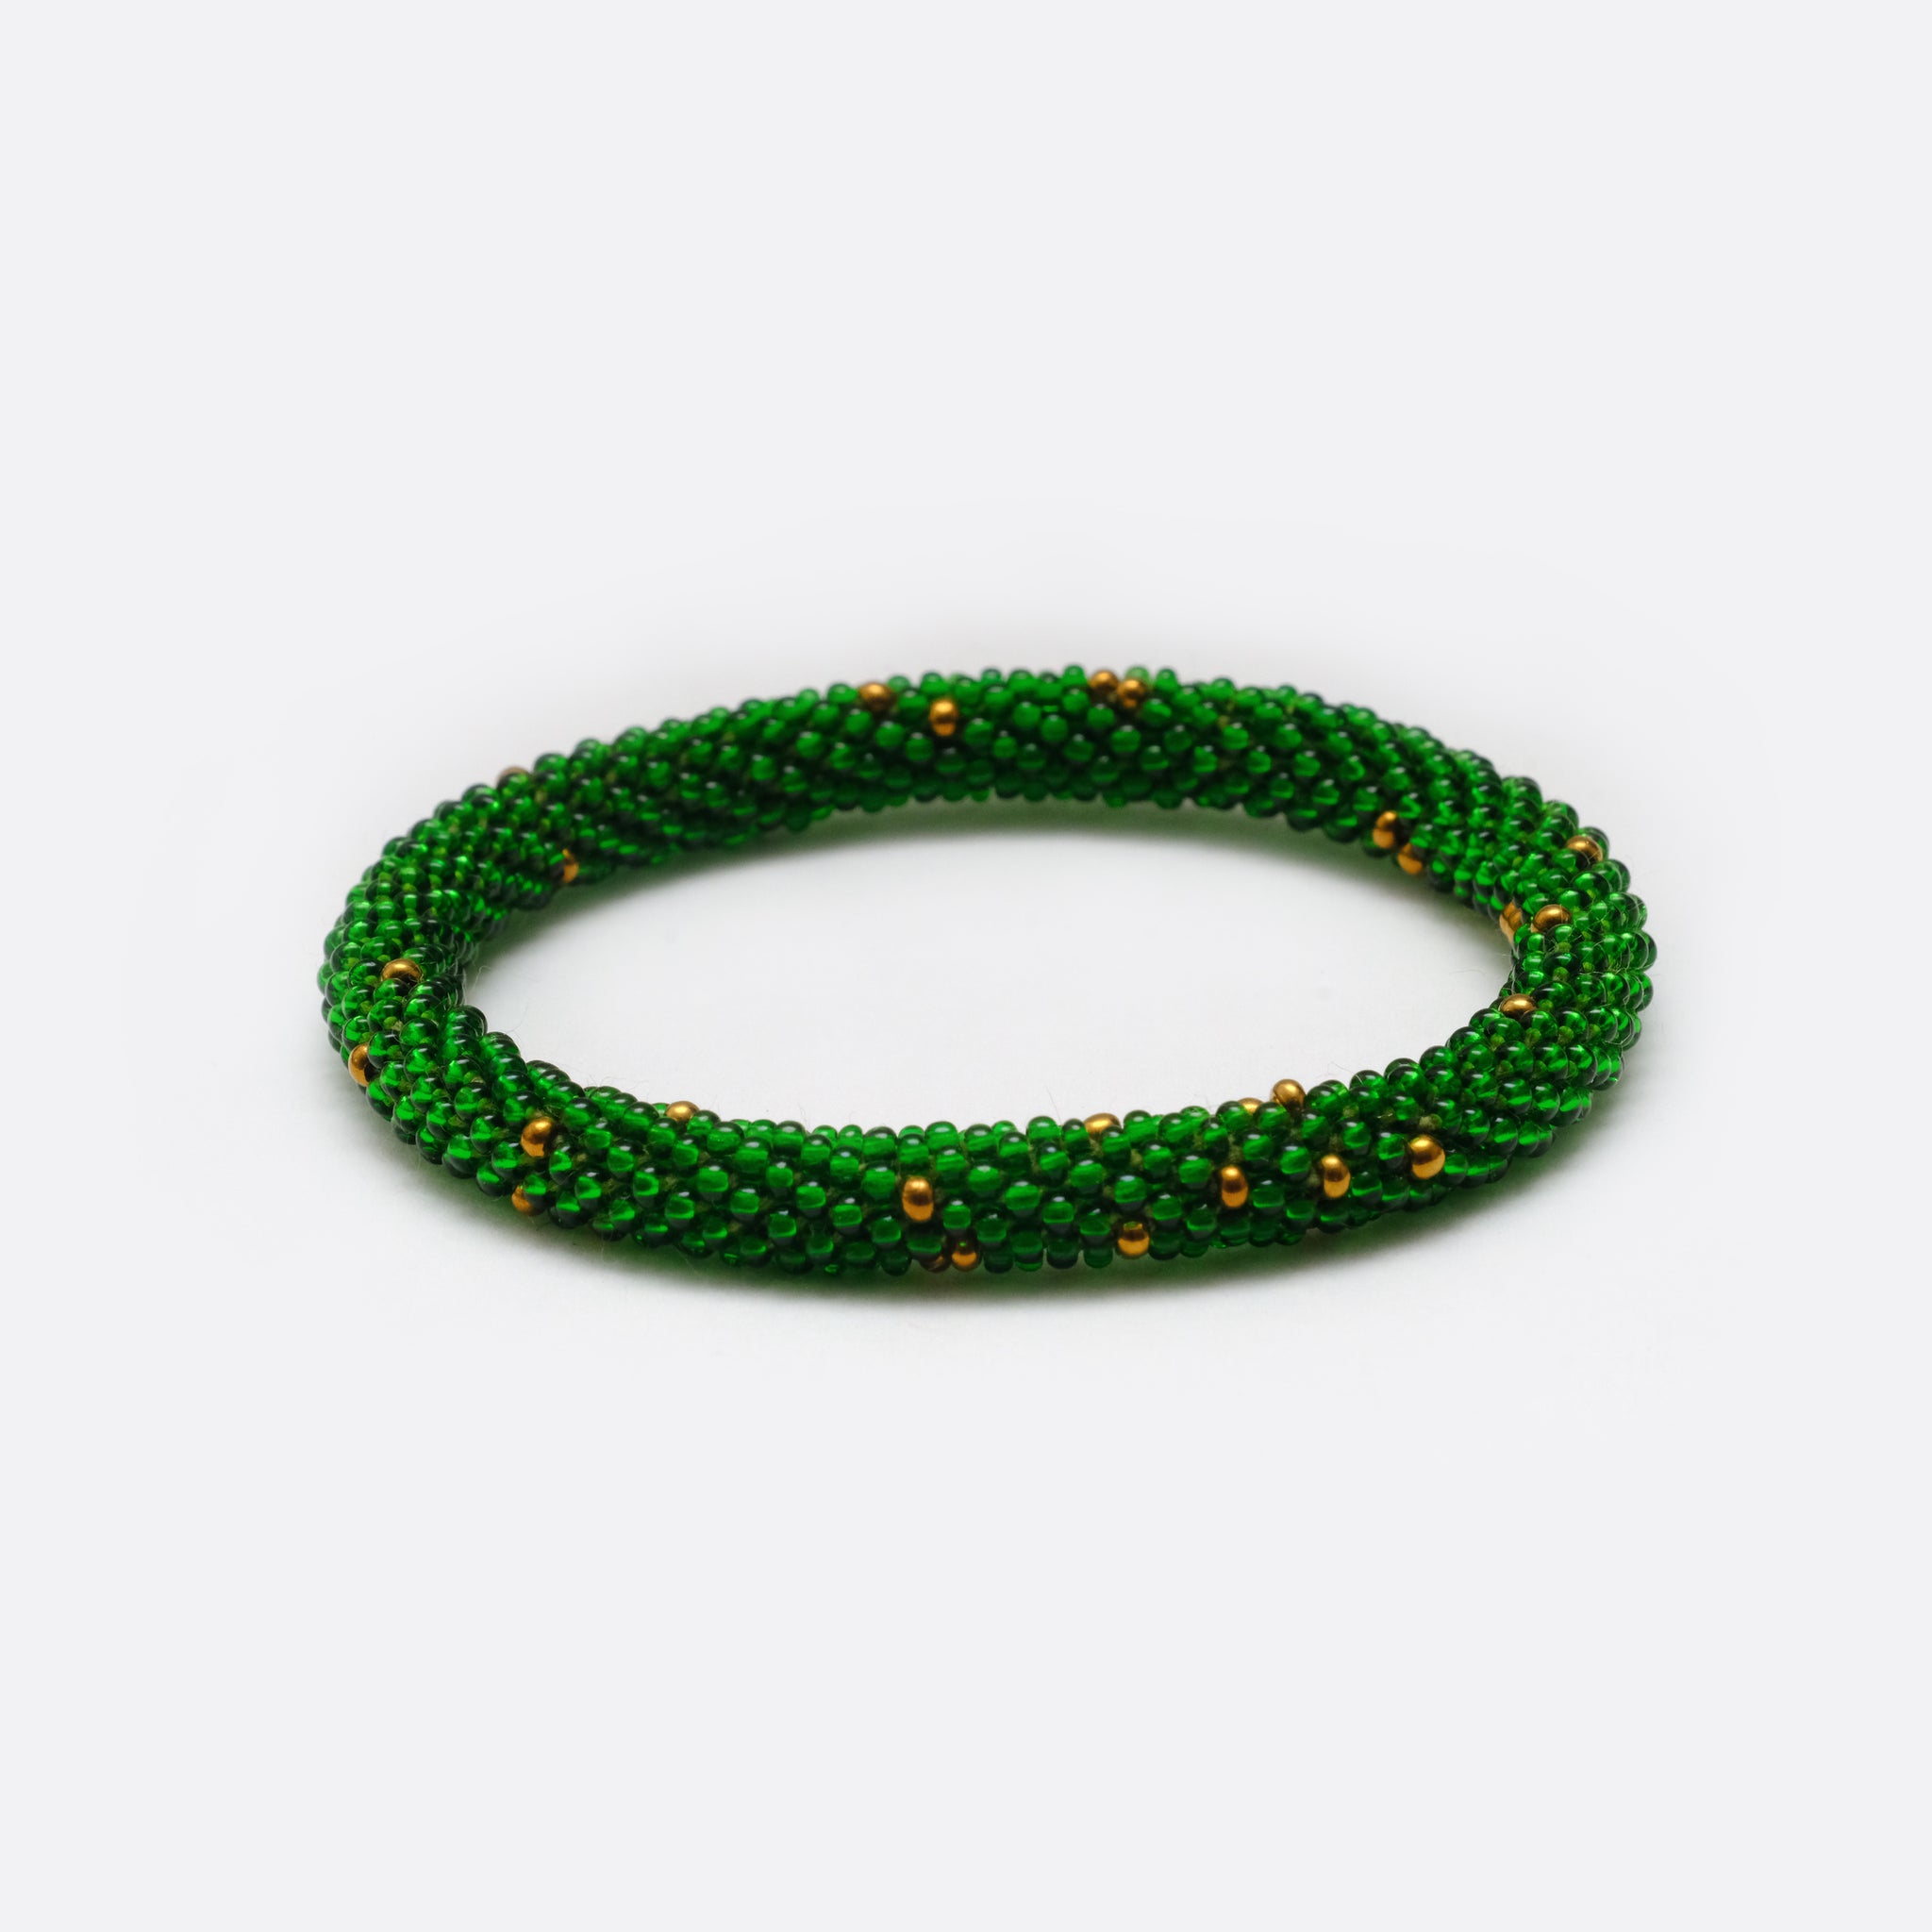 Beaded Bracelet - Shiny Green & Golden Dots